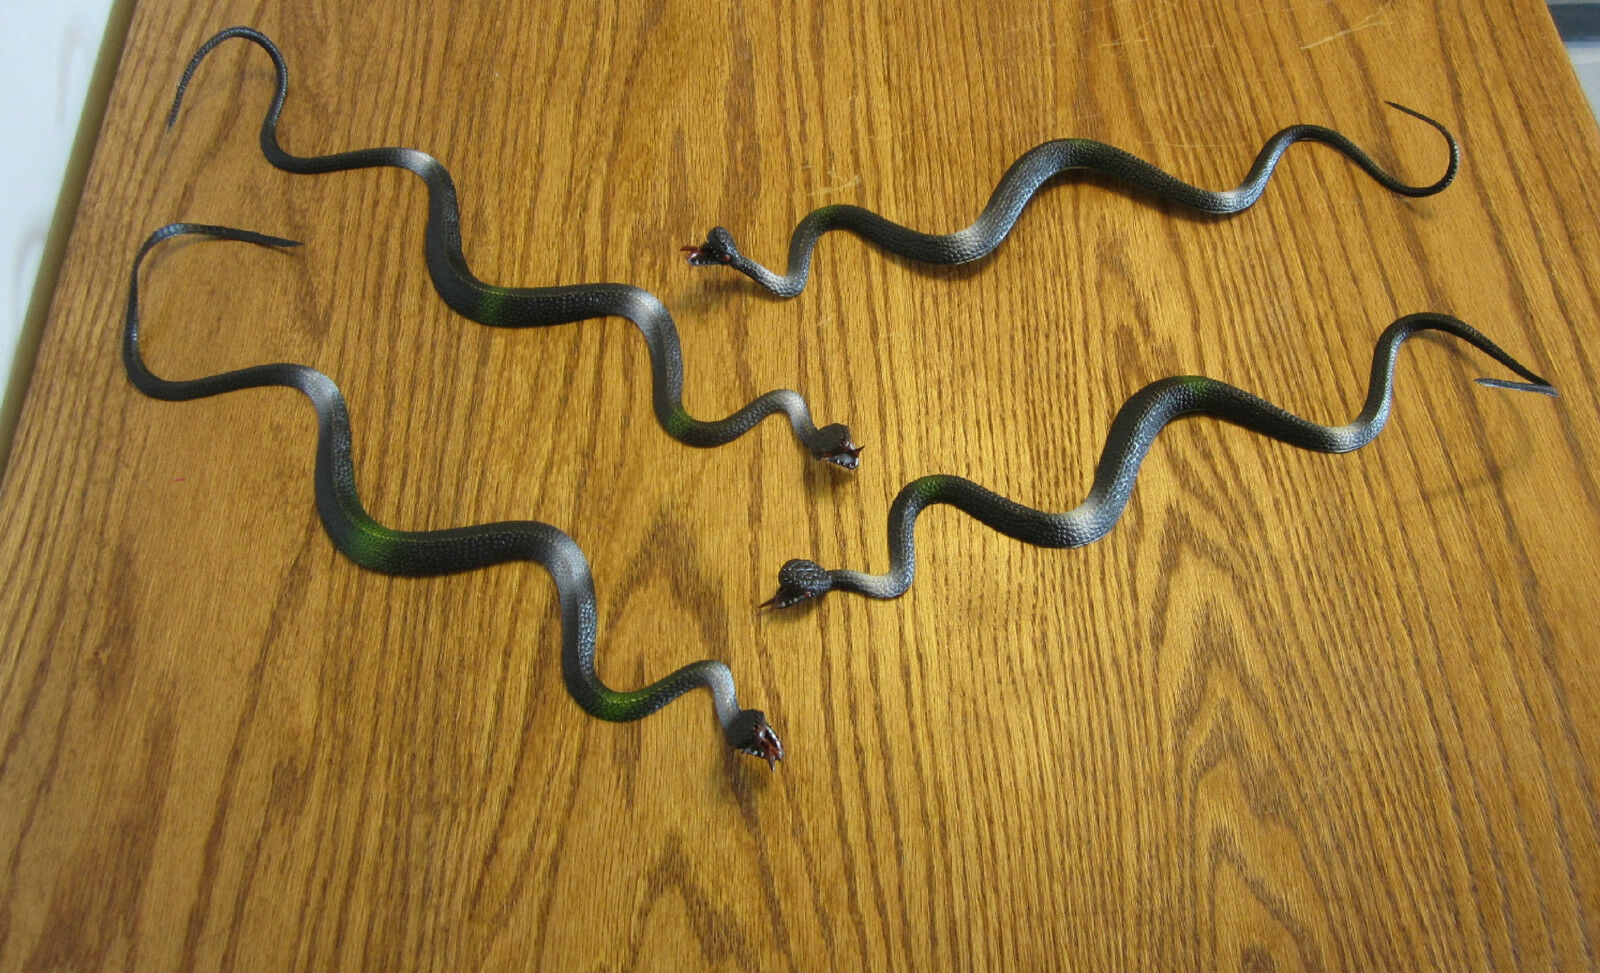 4 New Black Rubber Snakes 24" Toy Reptile Fake Pretend Snake Gag Gift